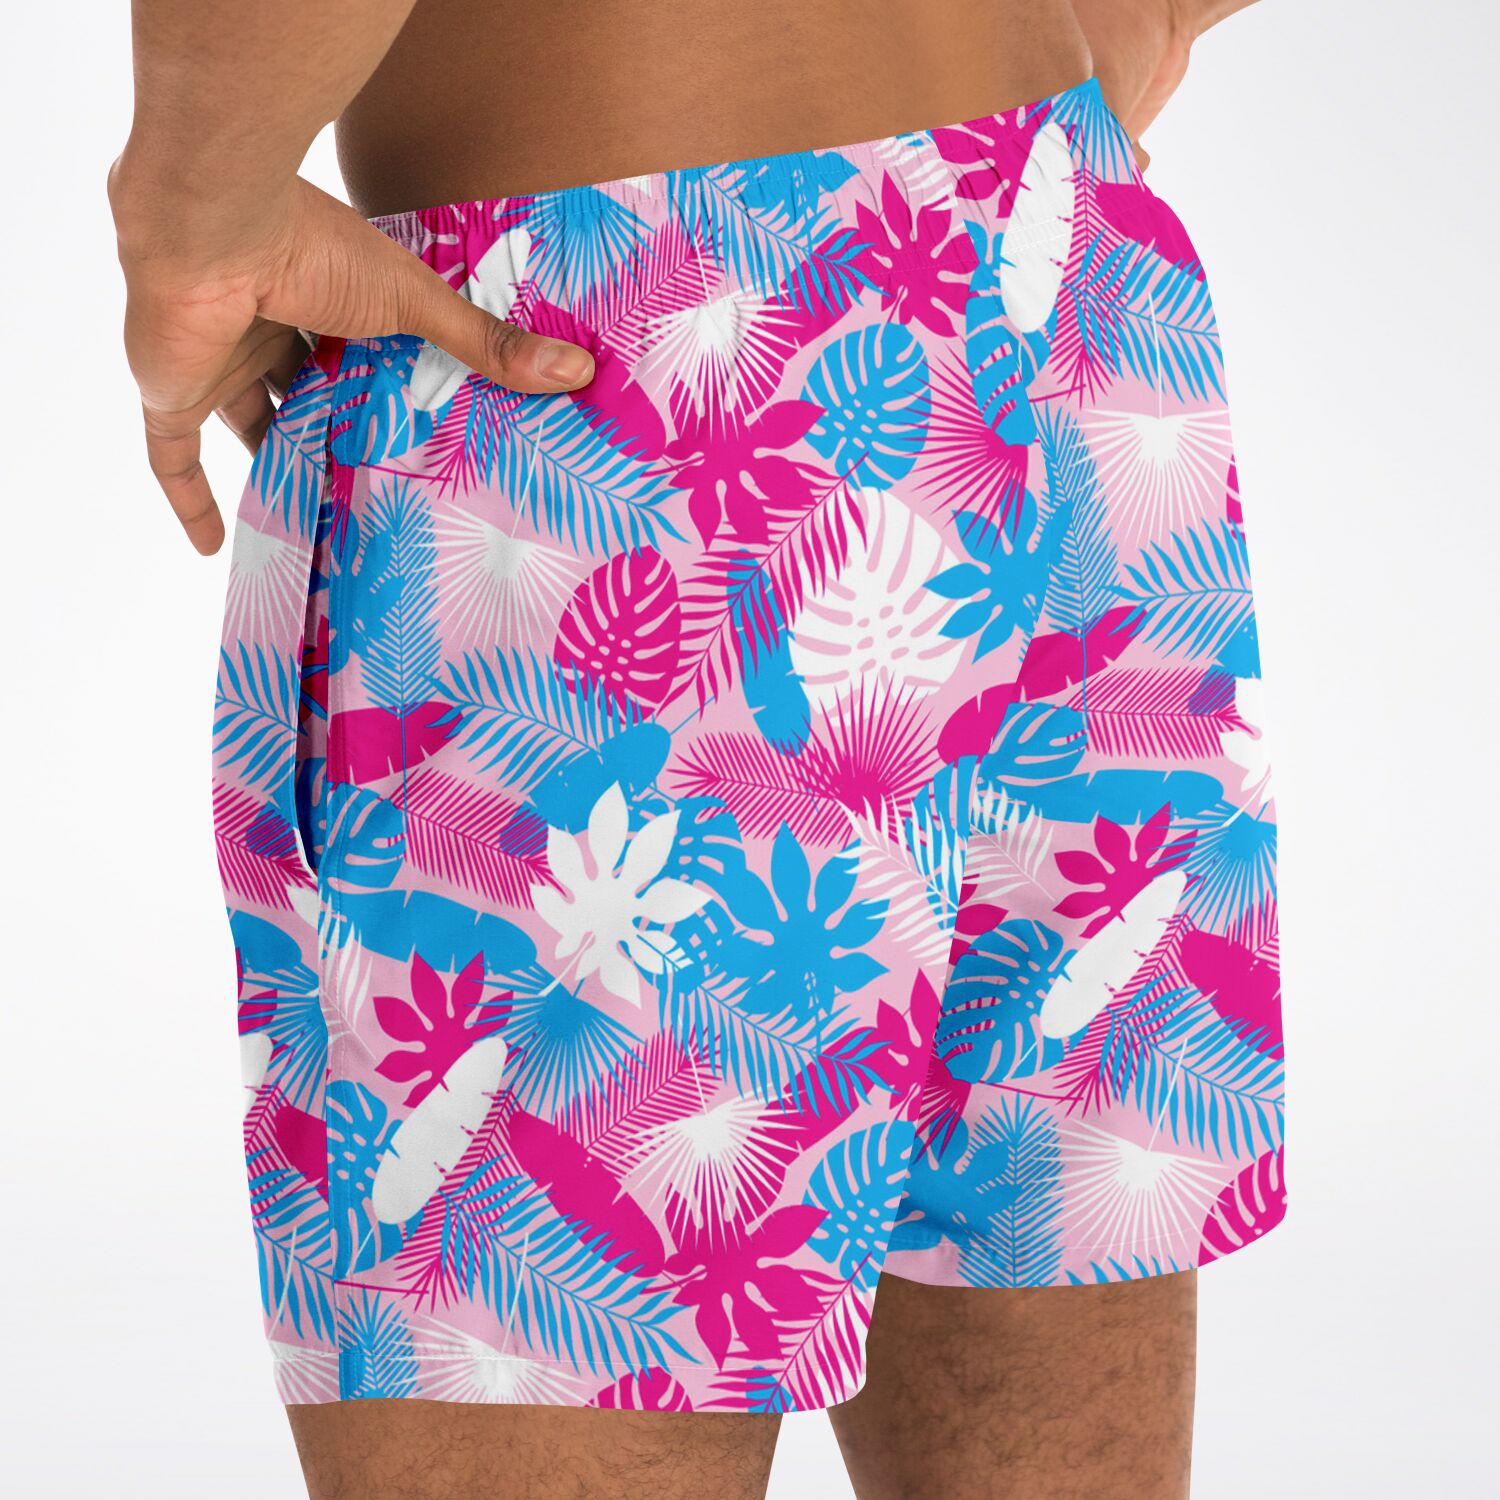 Rad Palm Neon Jungle Pink Men's Swim Trunks